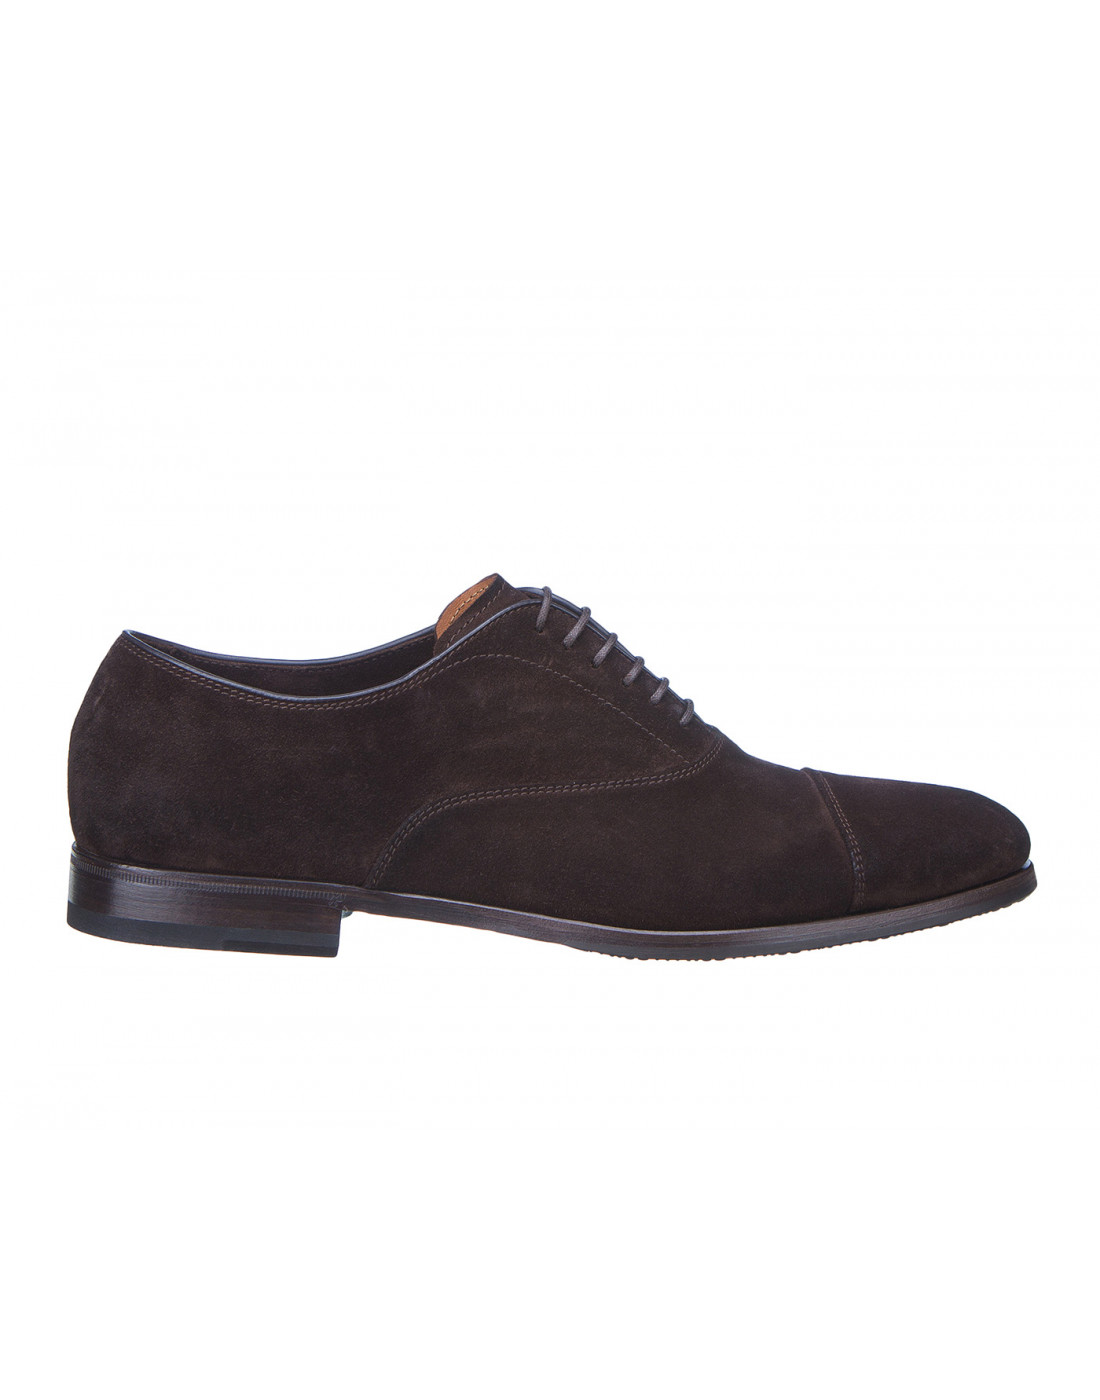 Туфли коричневые мужские Henderson S58305.1-1